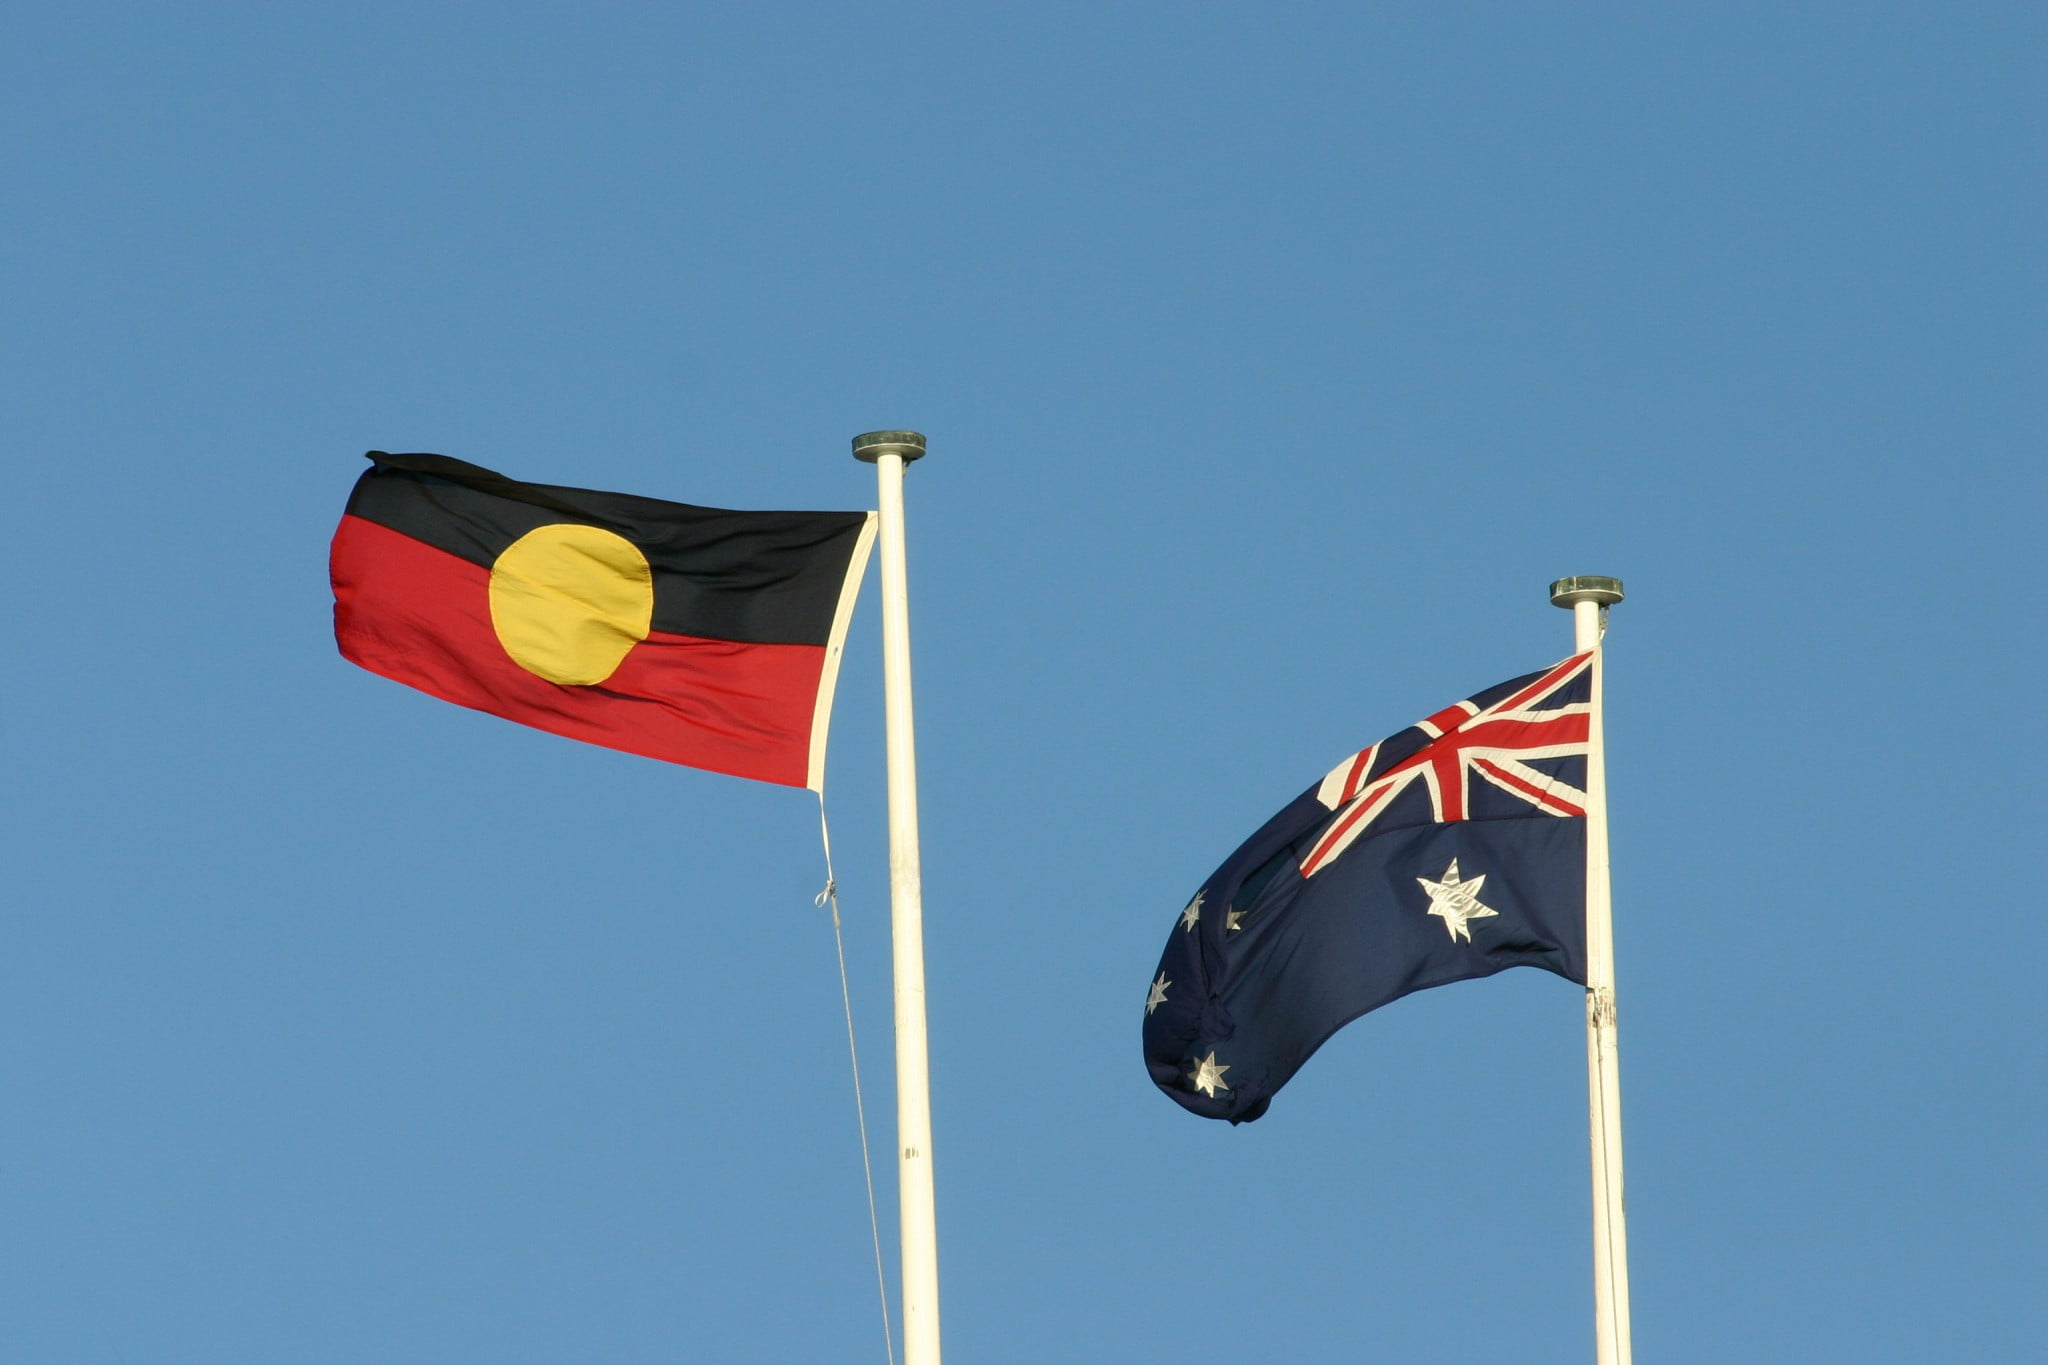 Aboriginal flag flies next to Australian flag